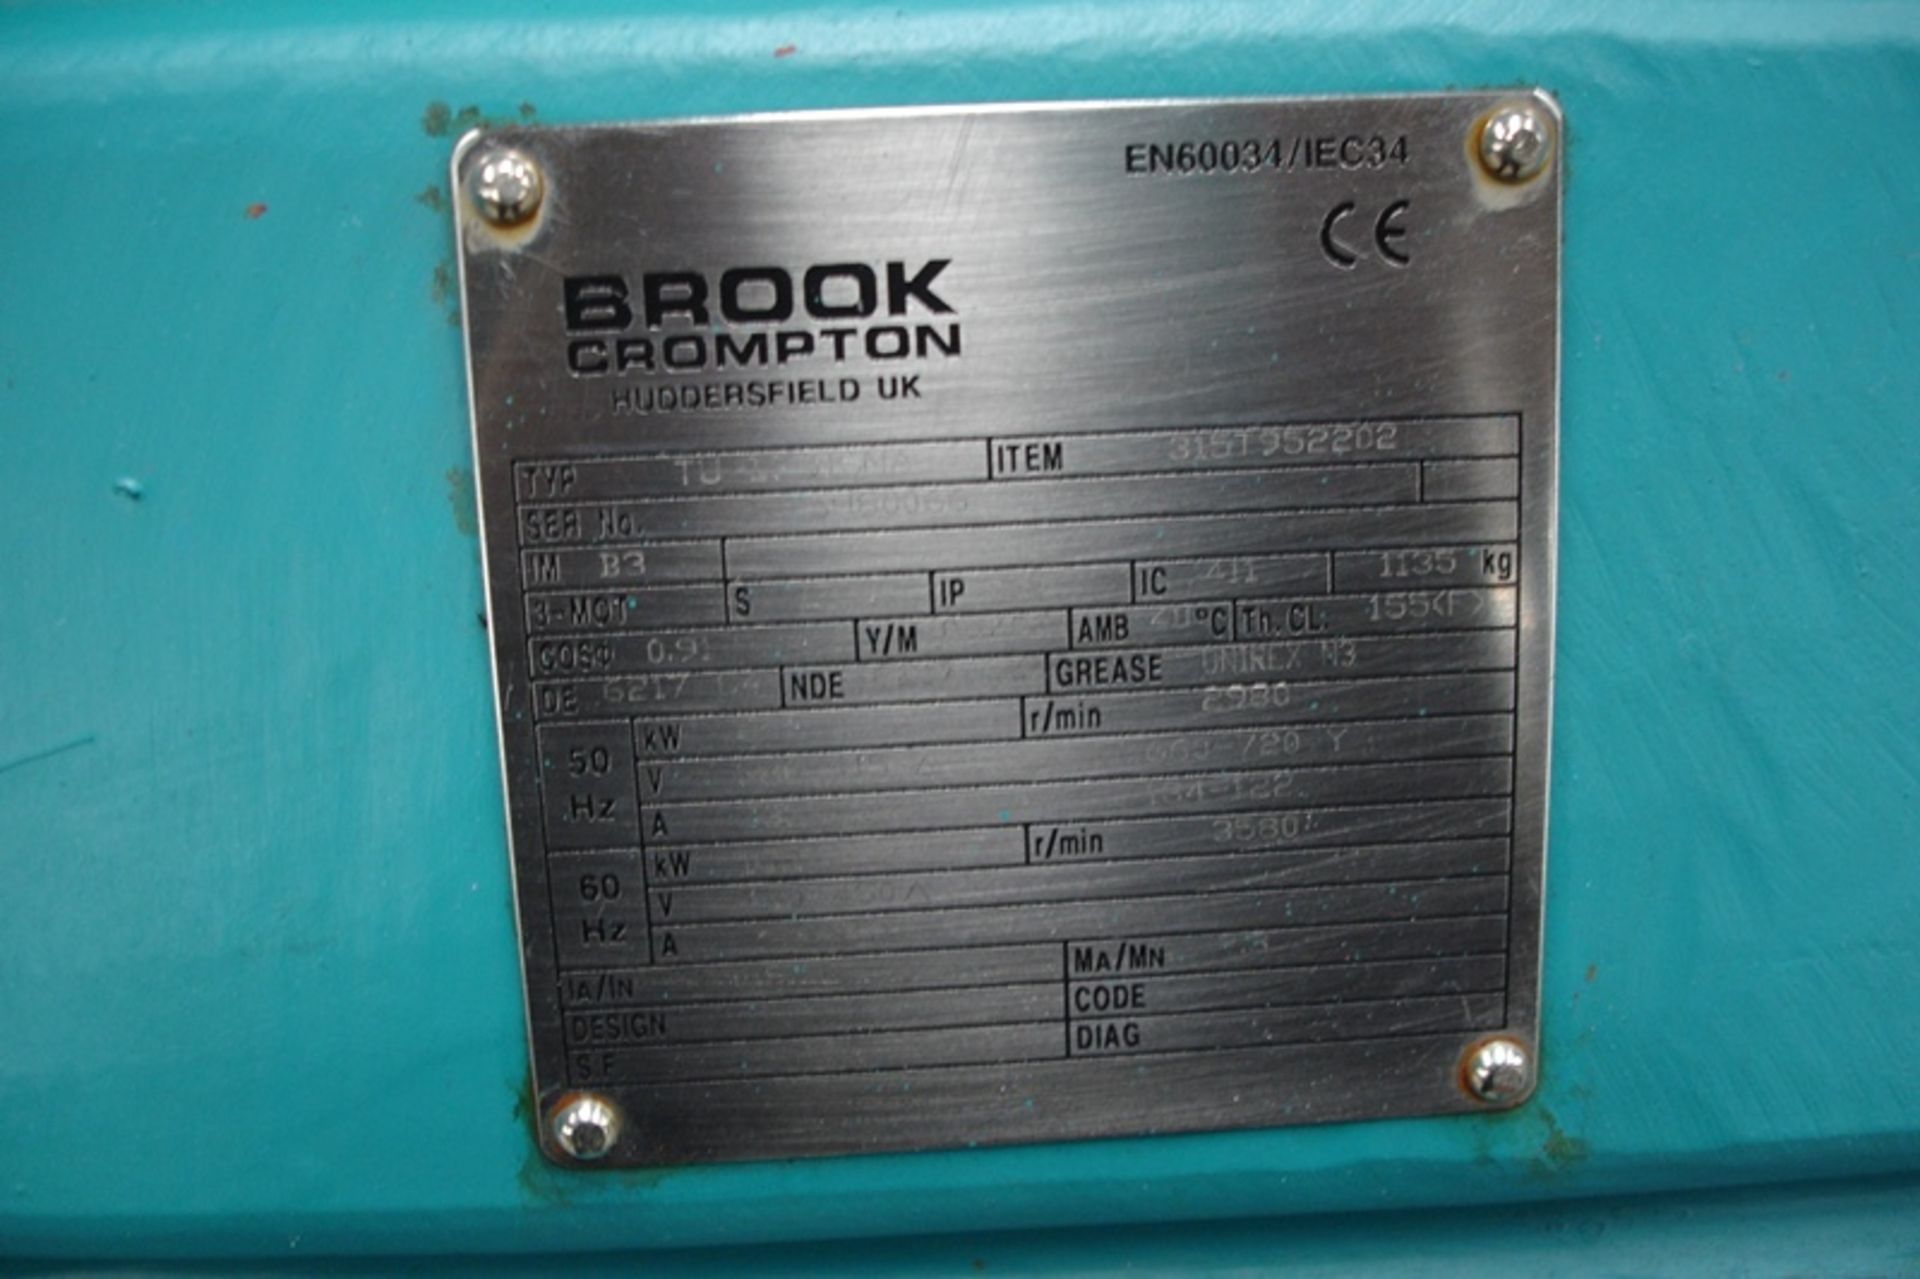 Brook Crompton 132kw Motor - Image 2 of 2